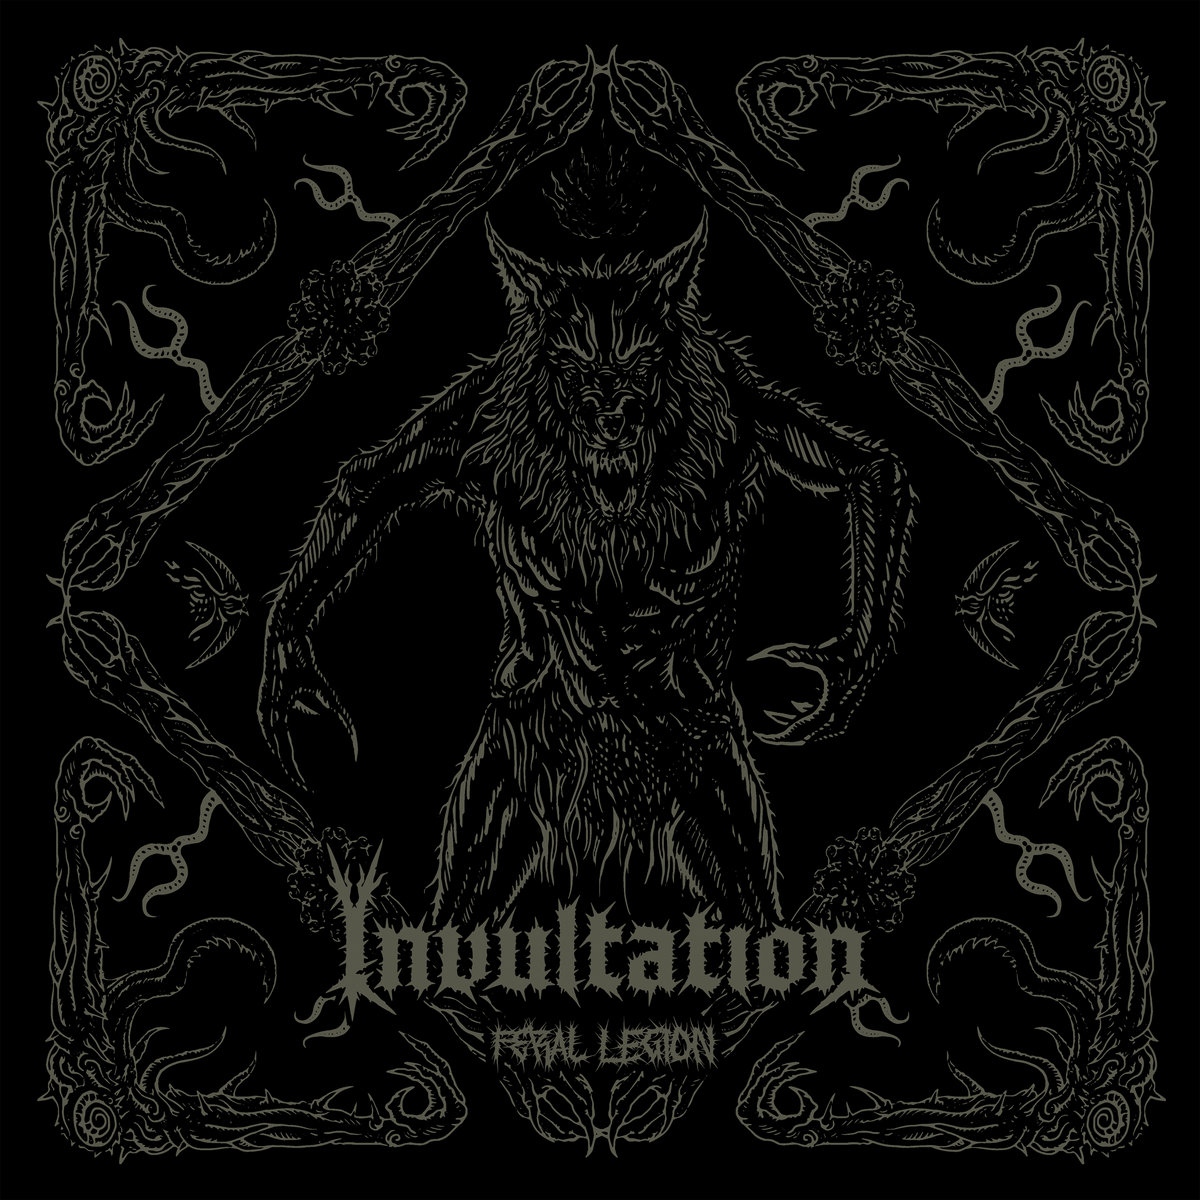 INVULTATION - Feral Legion cover 